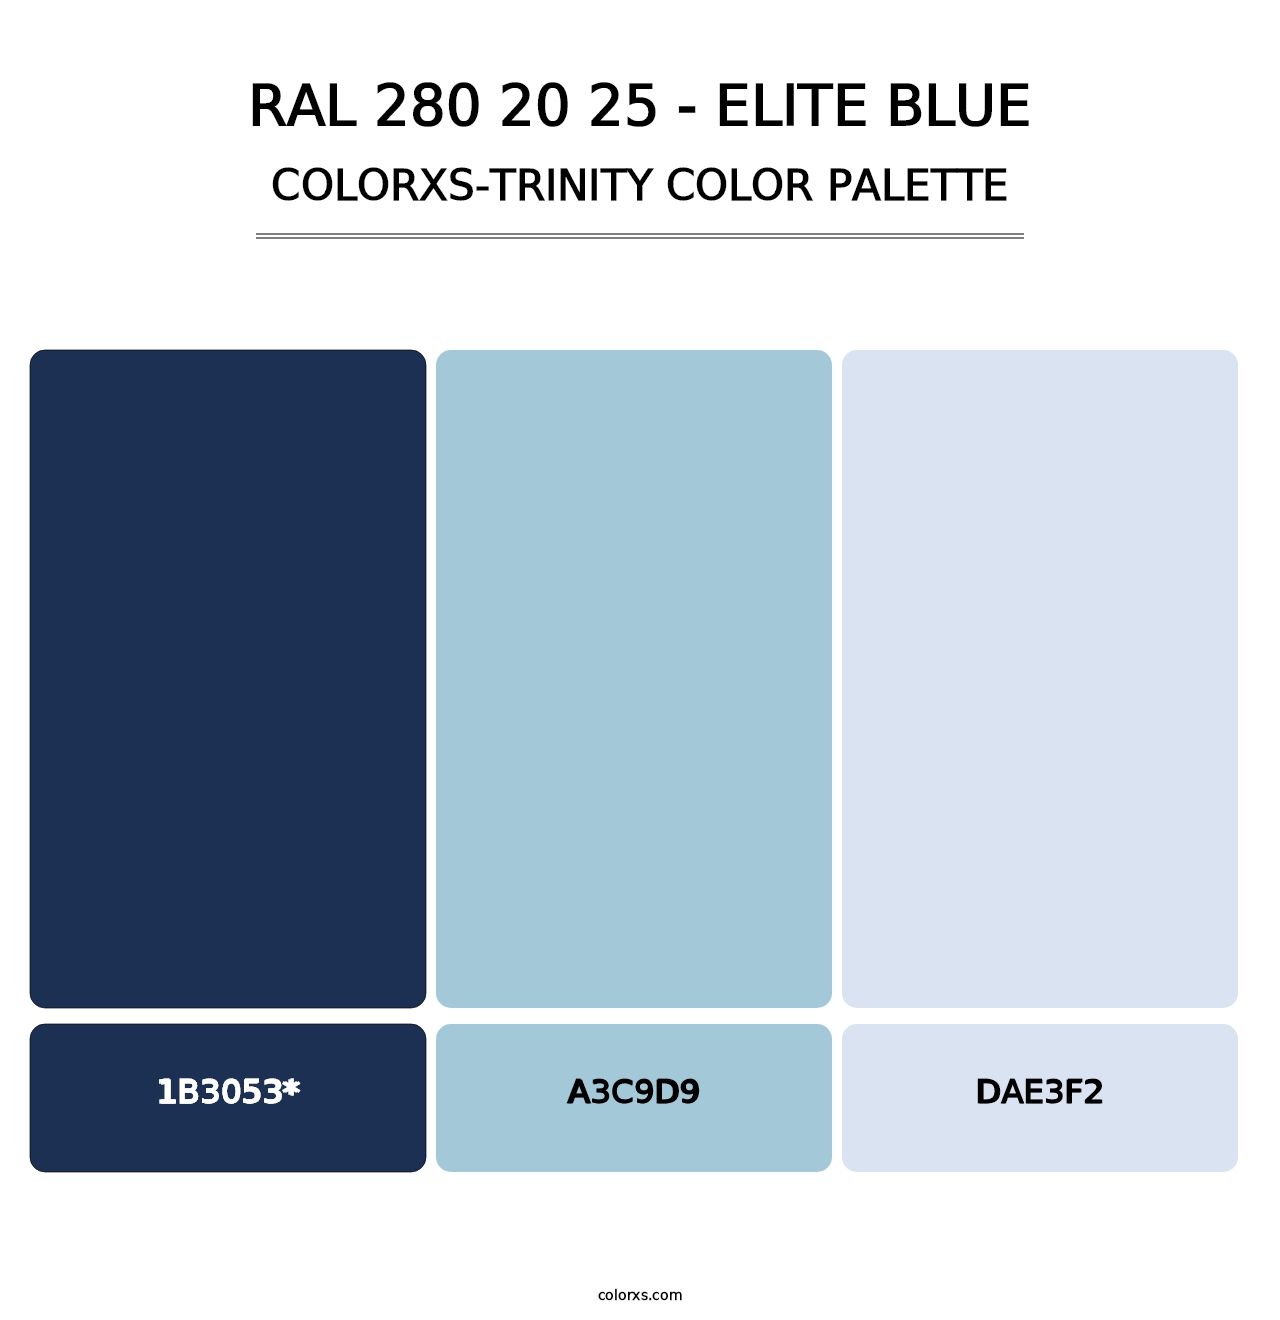 RAL 280 20 25 - Elite Blue - Colorxs Trinity Palette